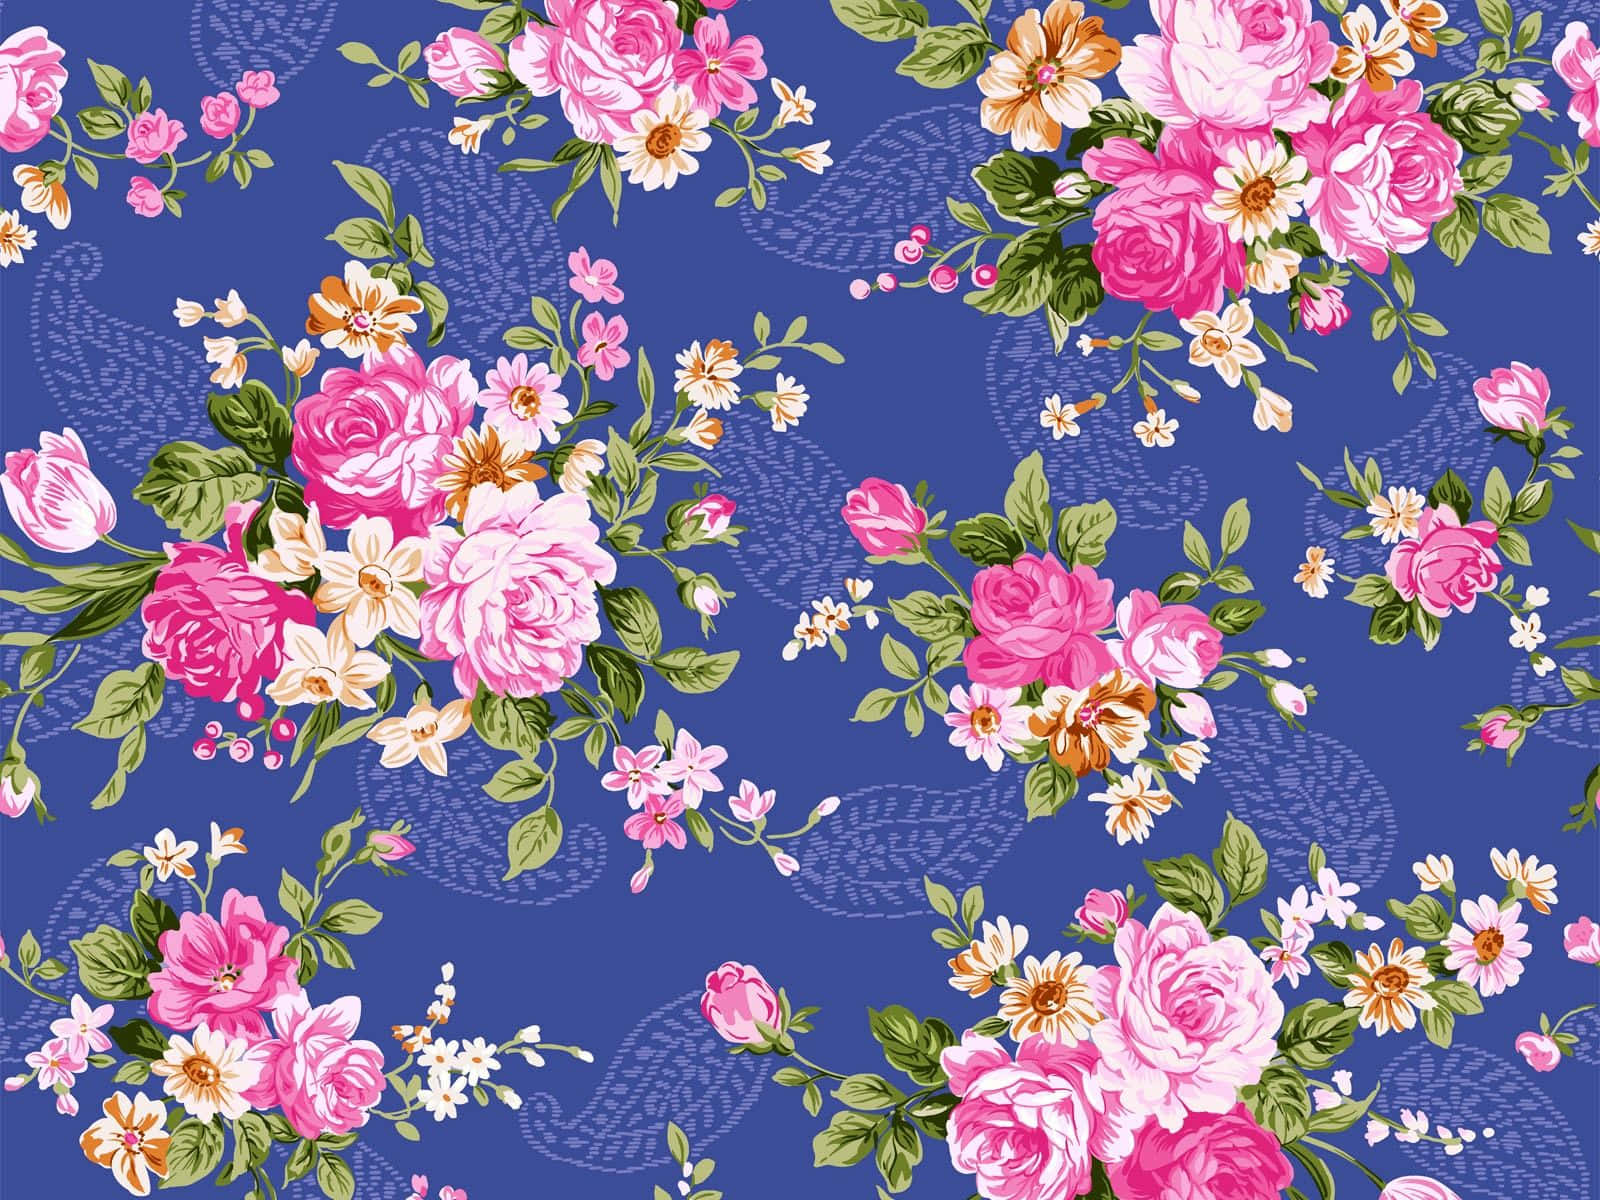 Timeless Elegance of Blooming Flowers Wallpaper